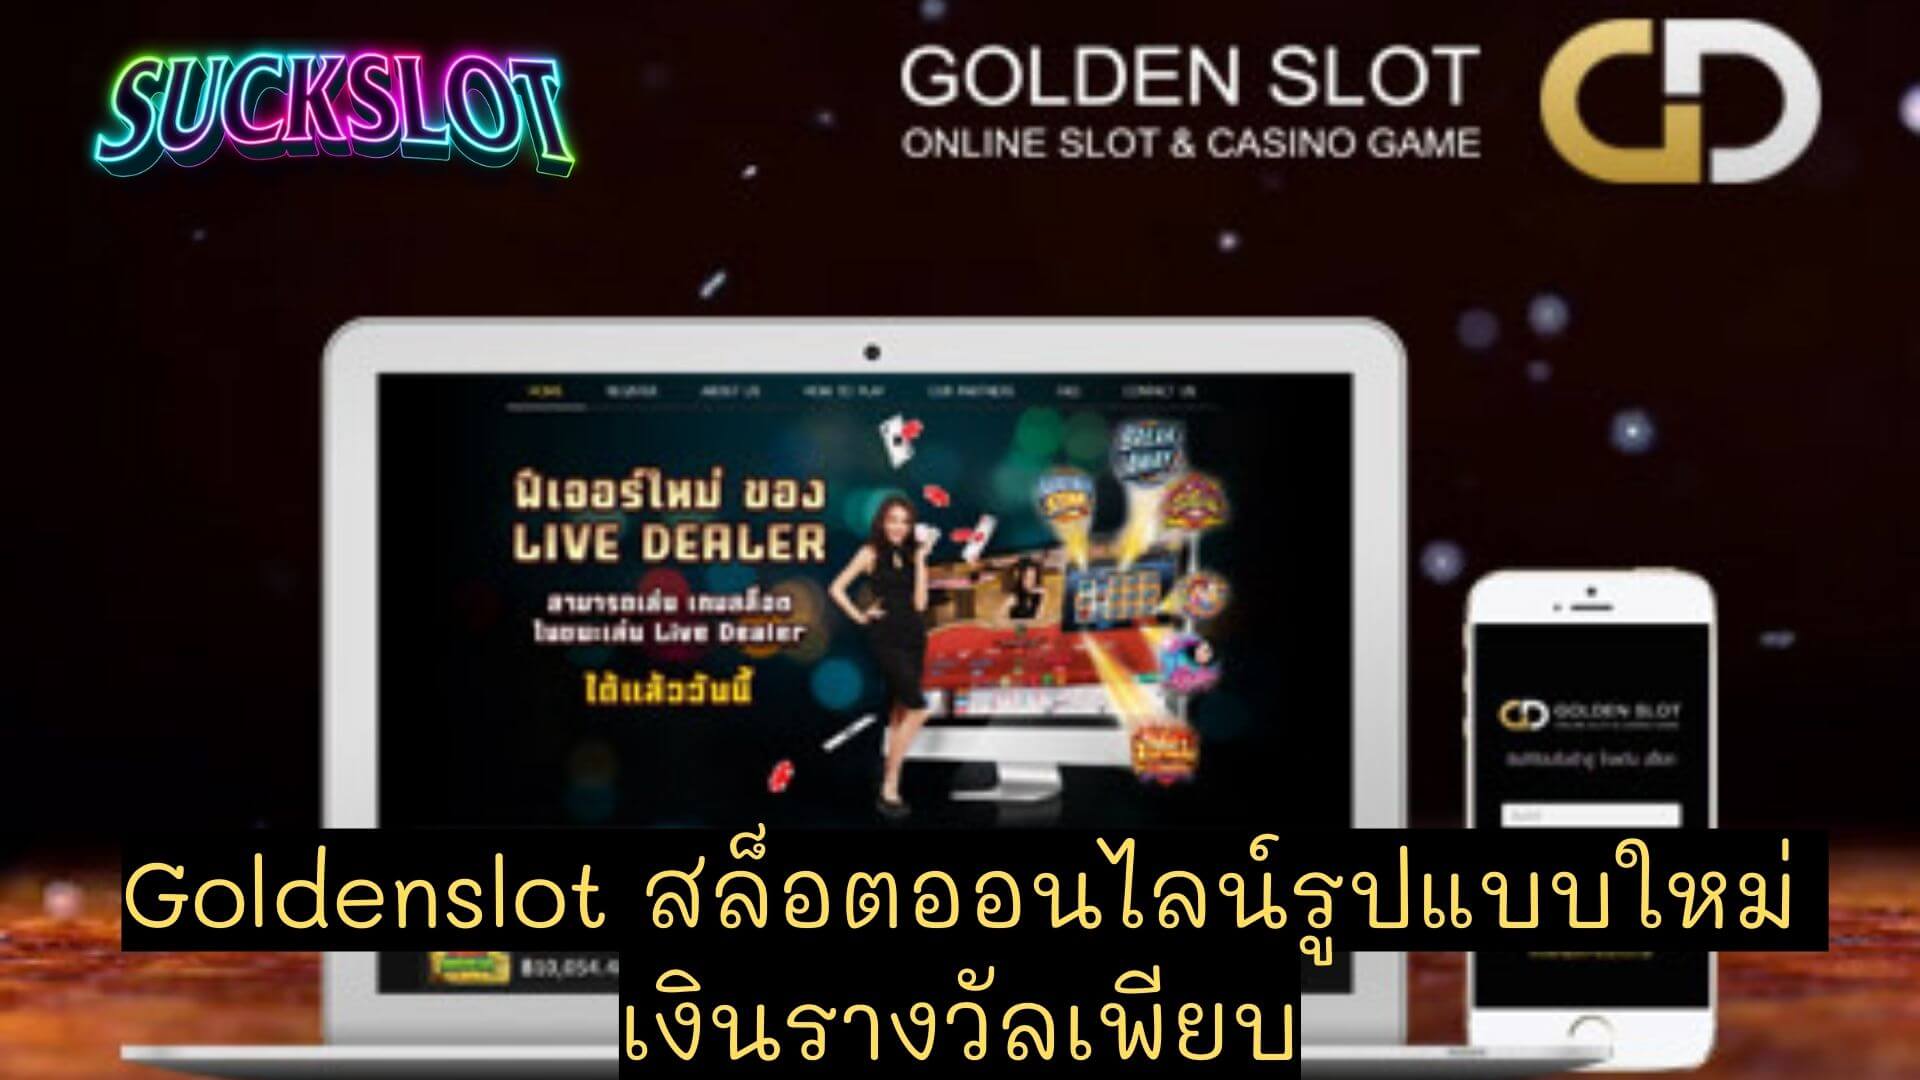 Goldenslot สล็อตออนไลน์รูปแบบใหม่ เงินรางวัลเพียบ